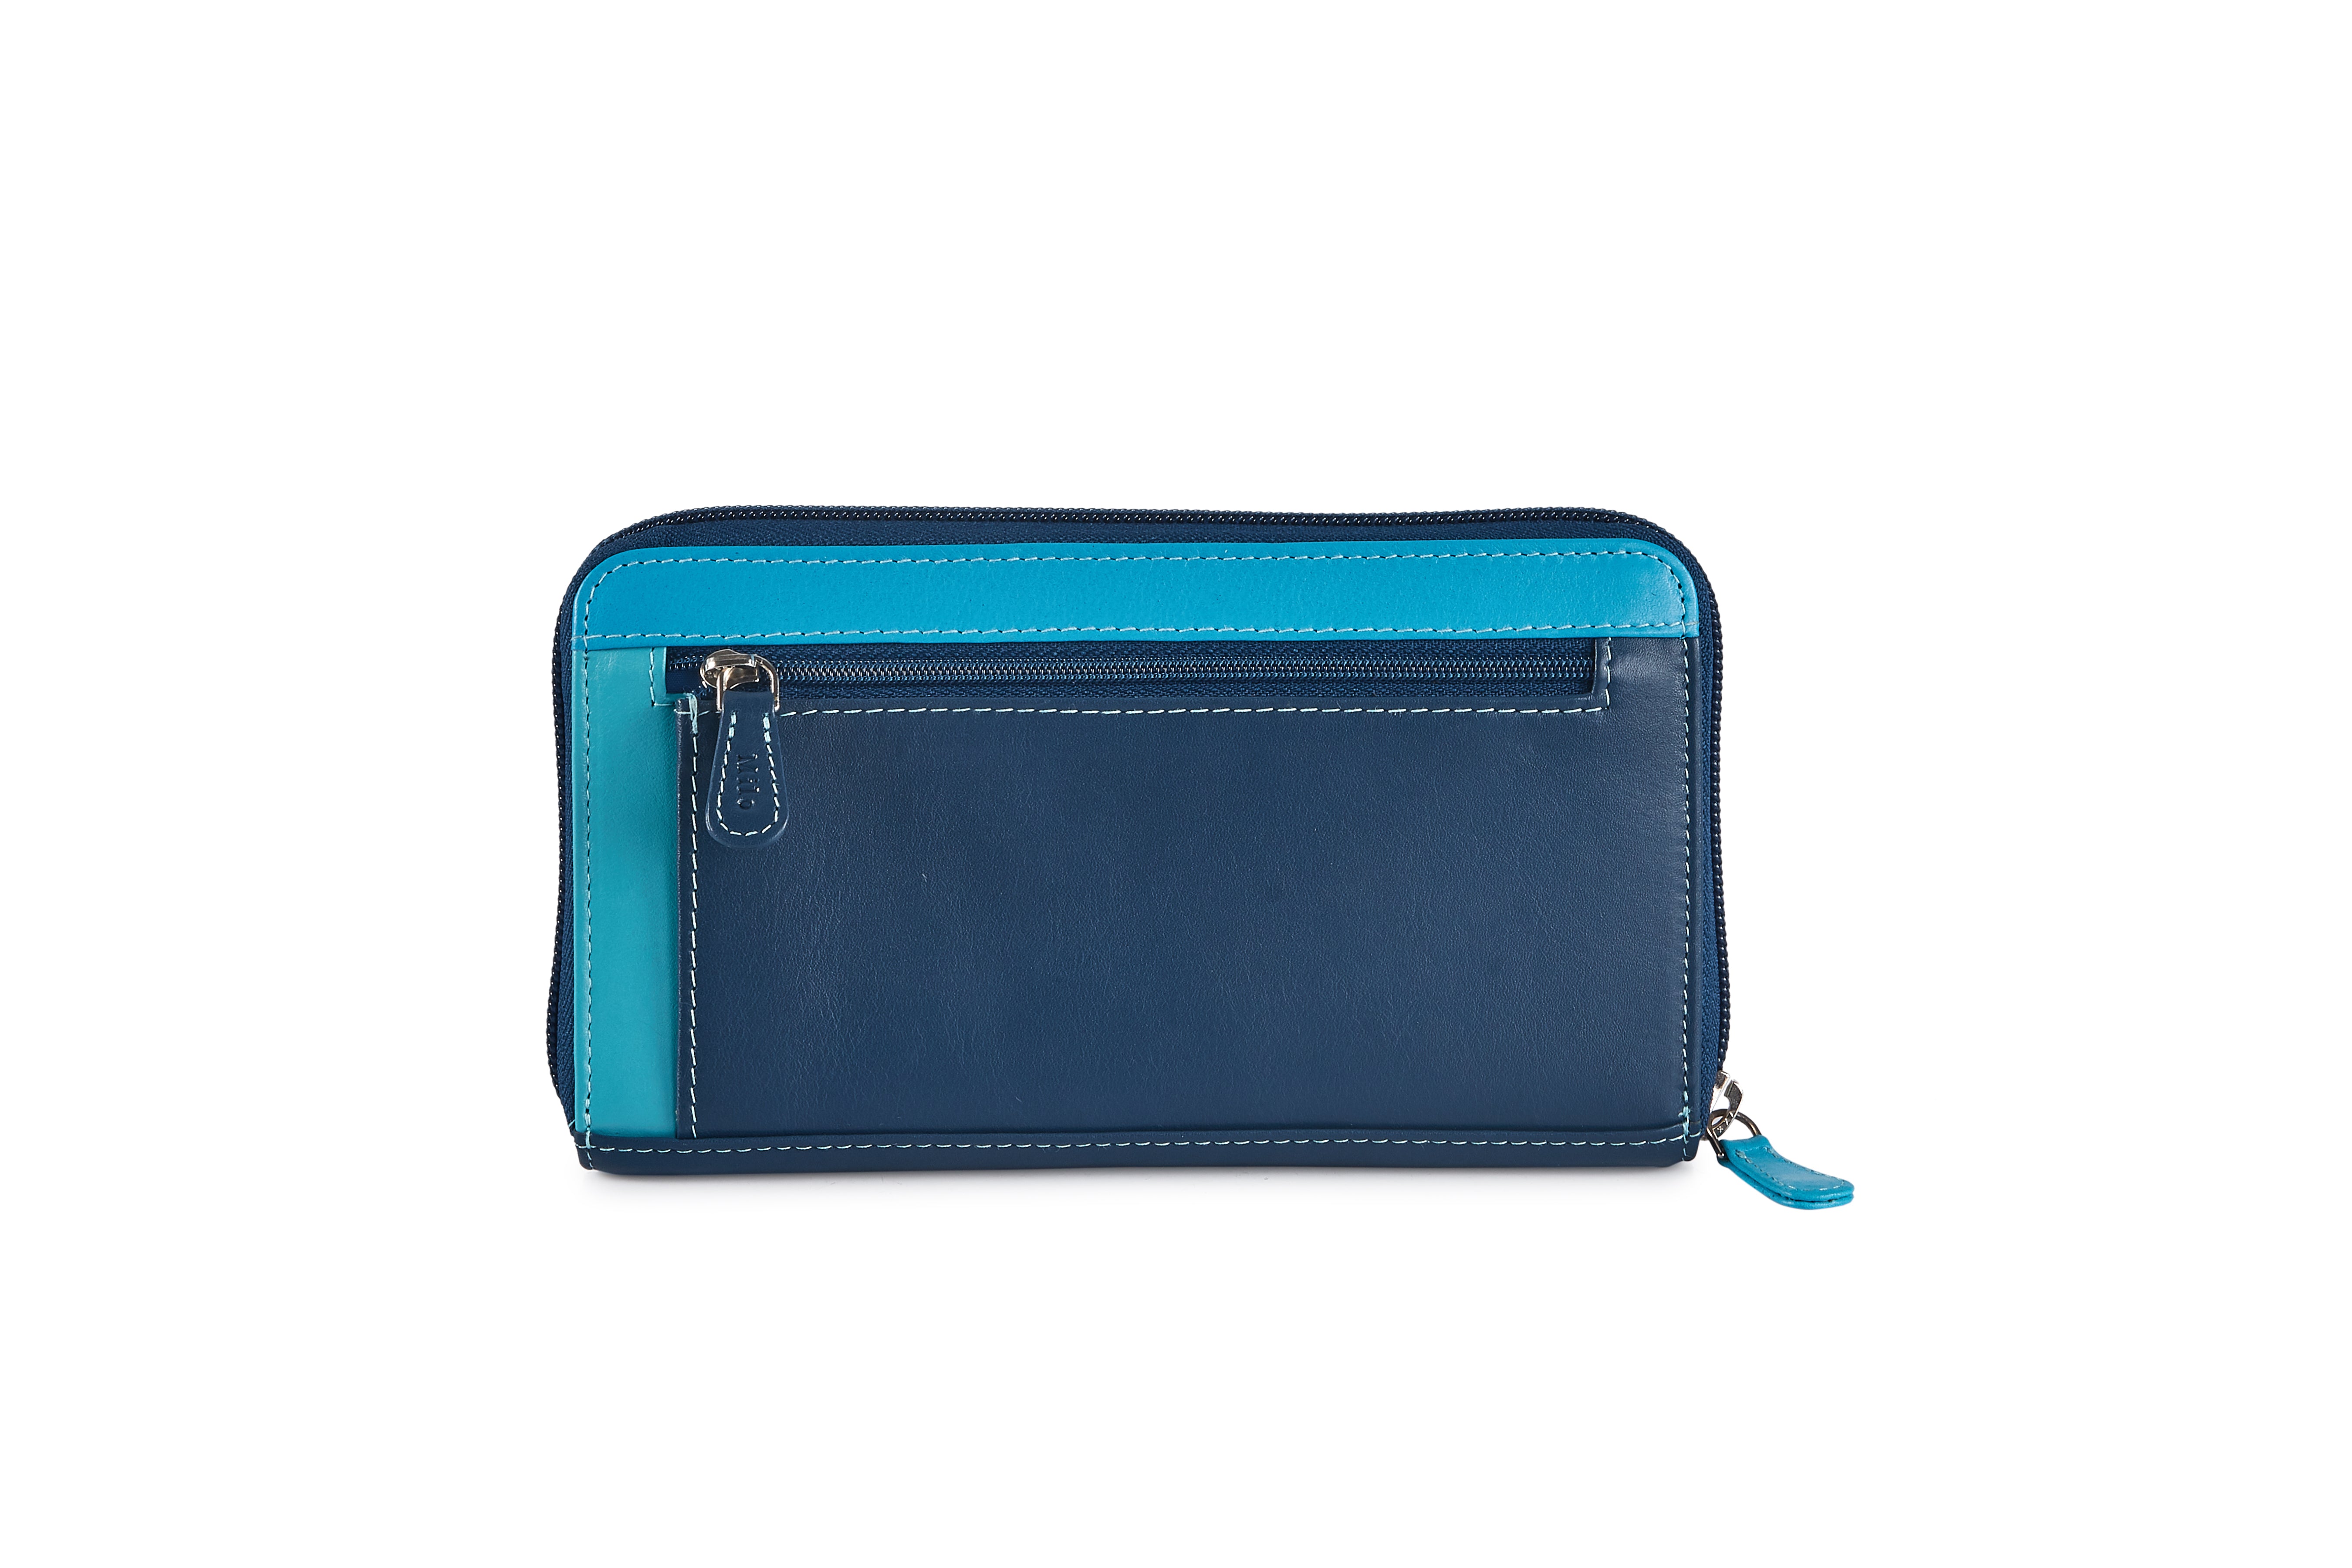 Sarita | Style - 5343, Zip around leather wallets